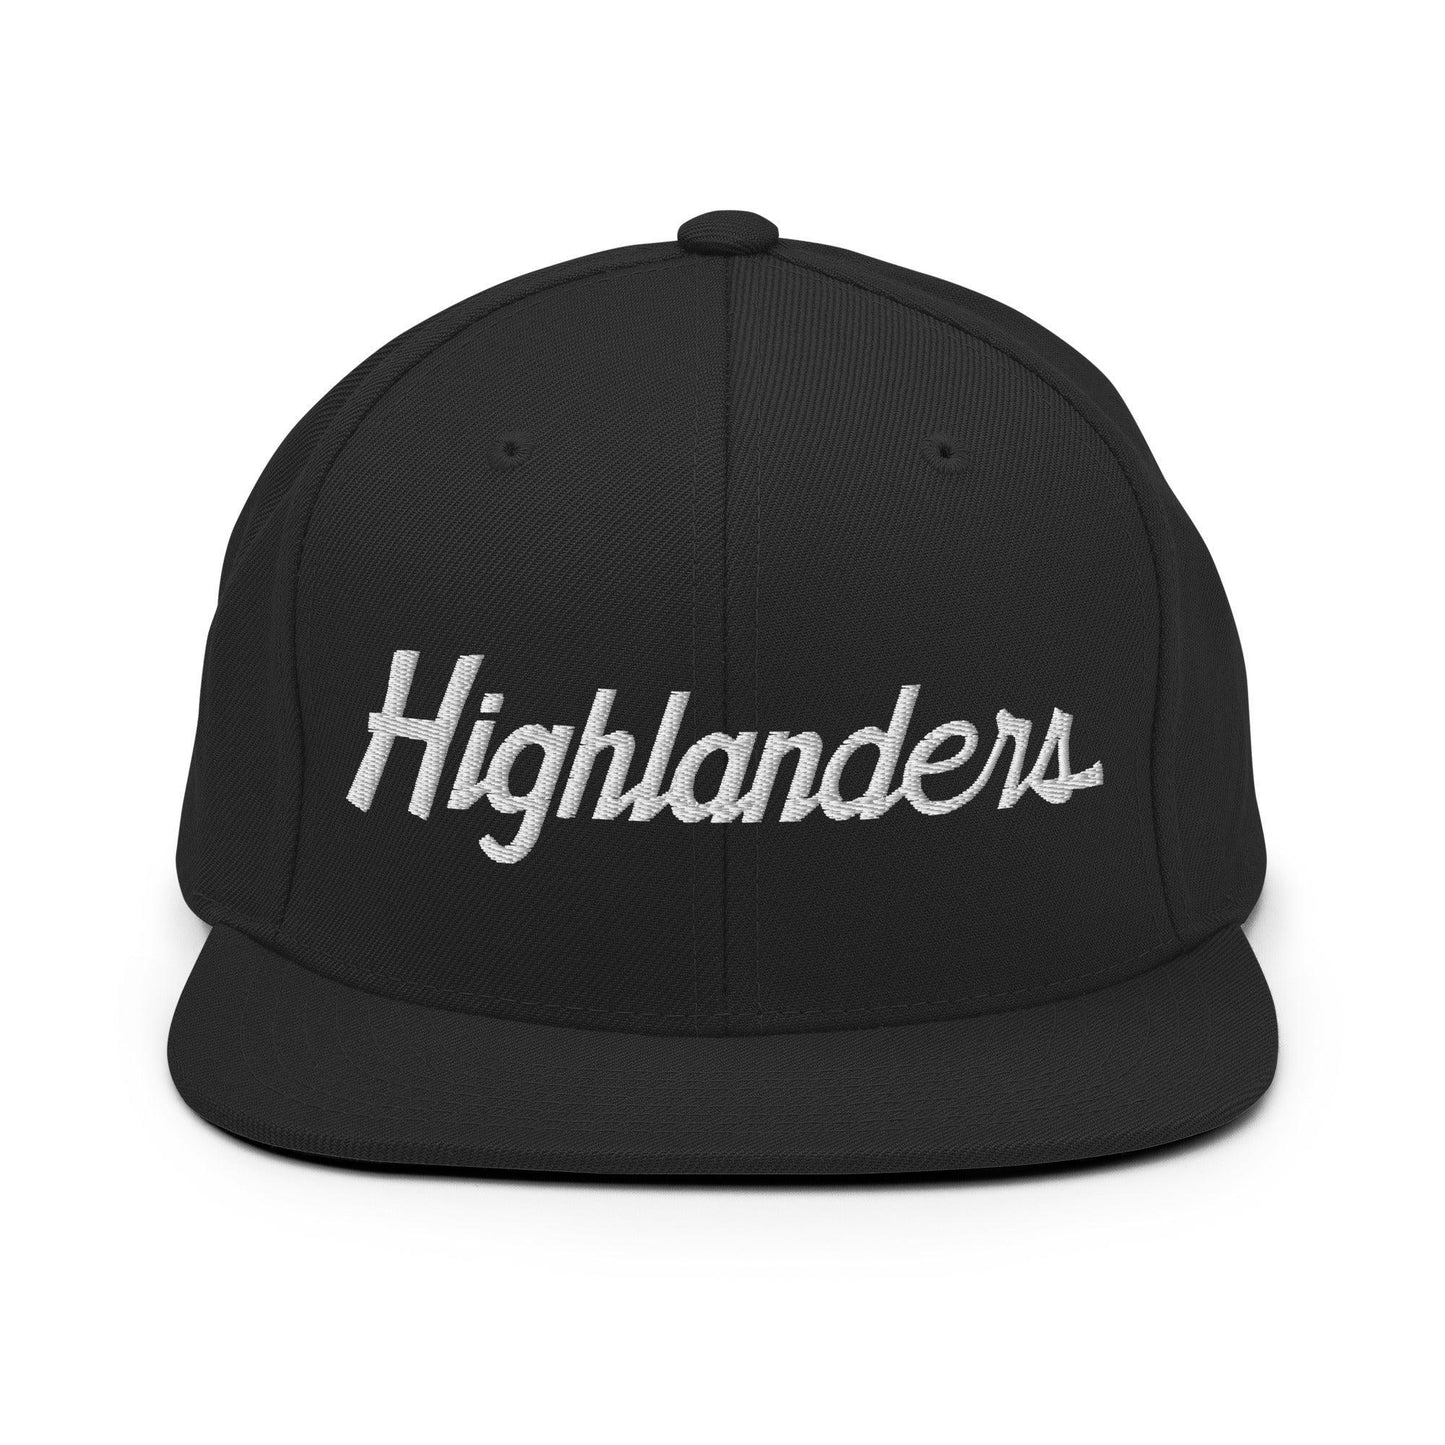 Highlanders School Mascot Script Snapback Hat Black